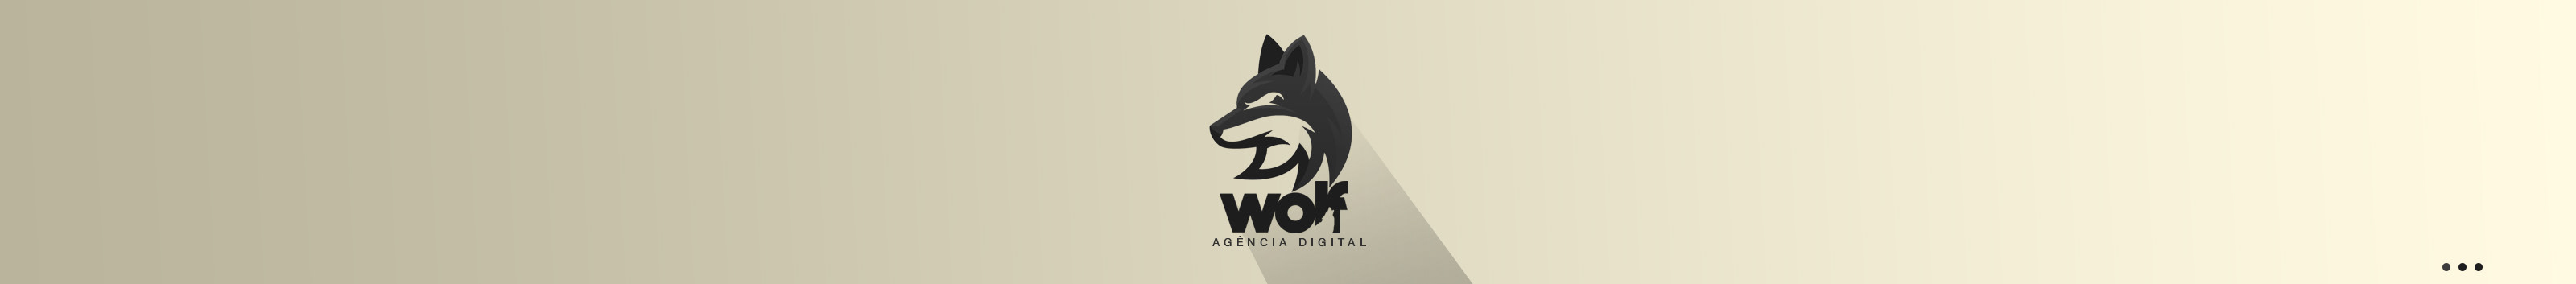 Agência Wolf's profile banner